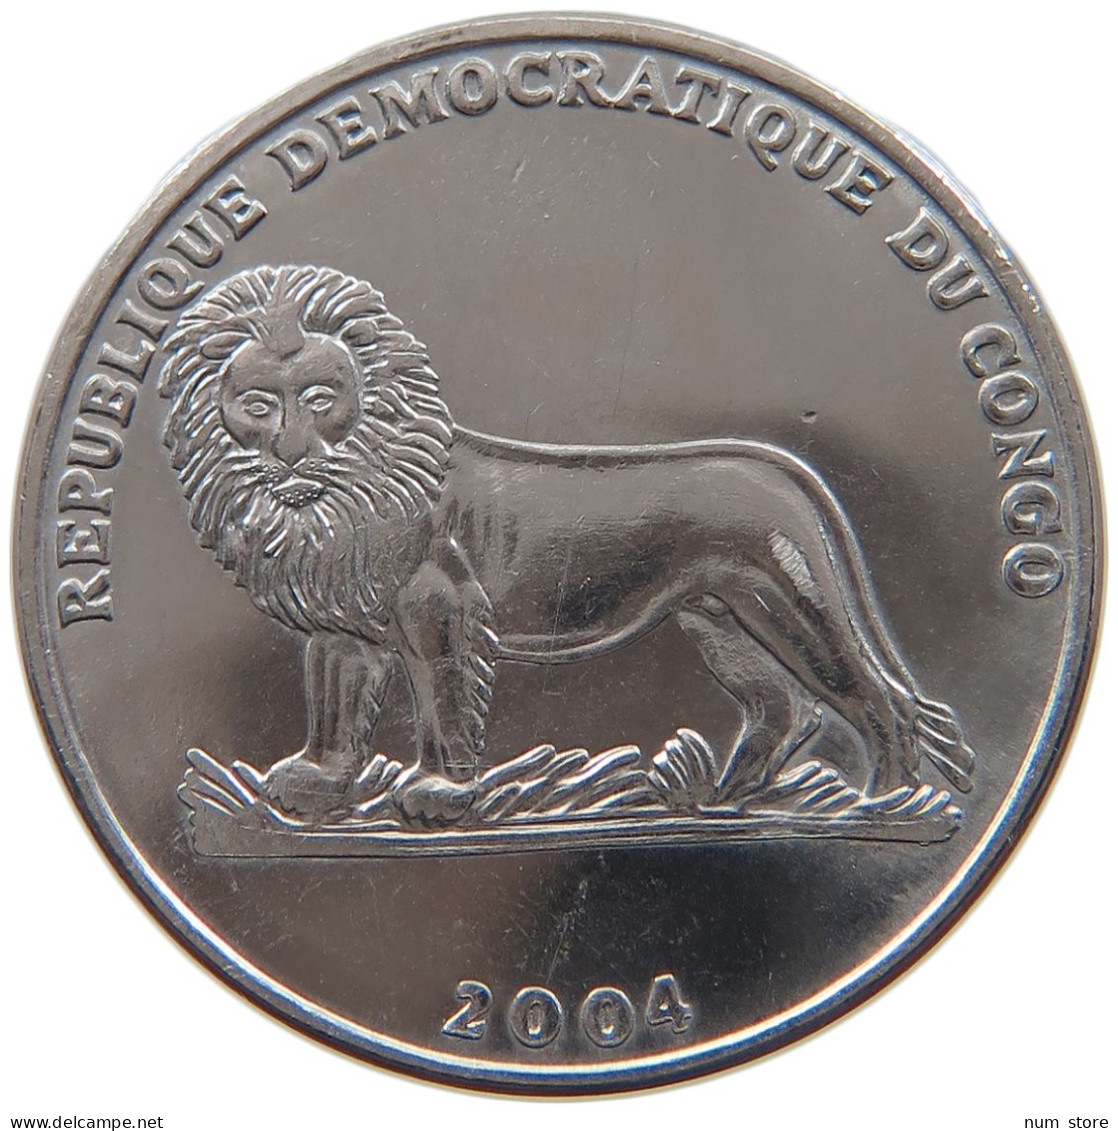 CONGO FRANC 2004  #MA 067389 - Congo (Republic 1960)